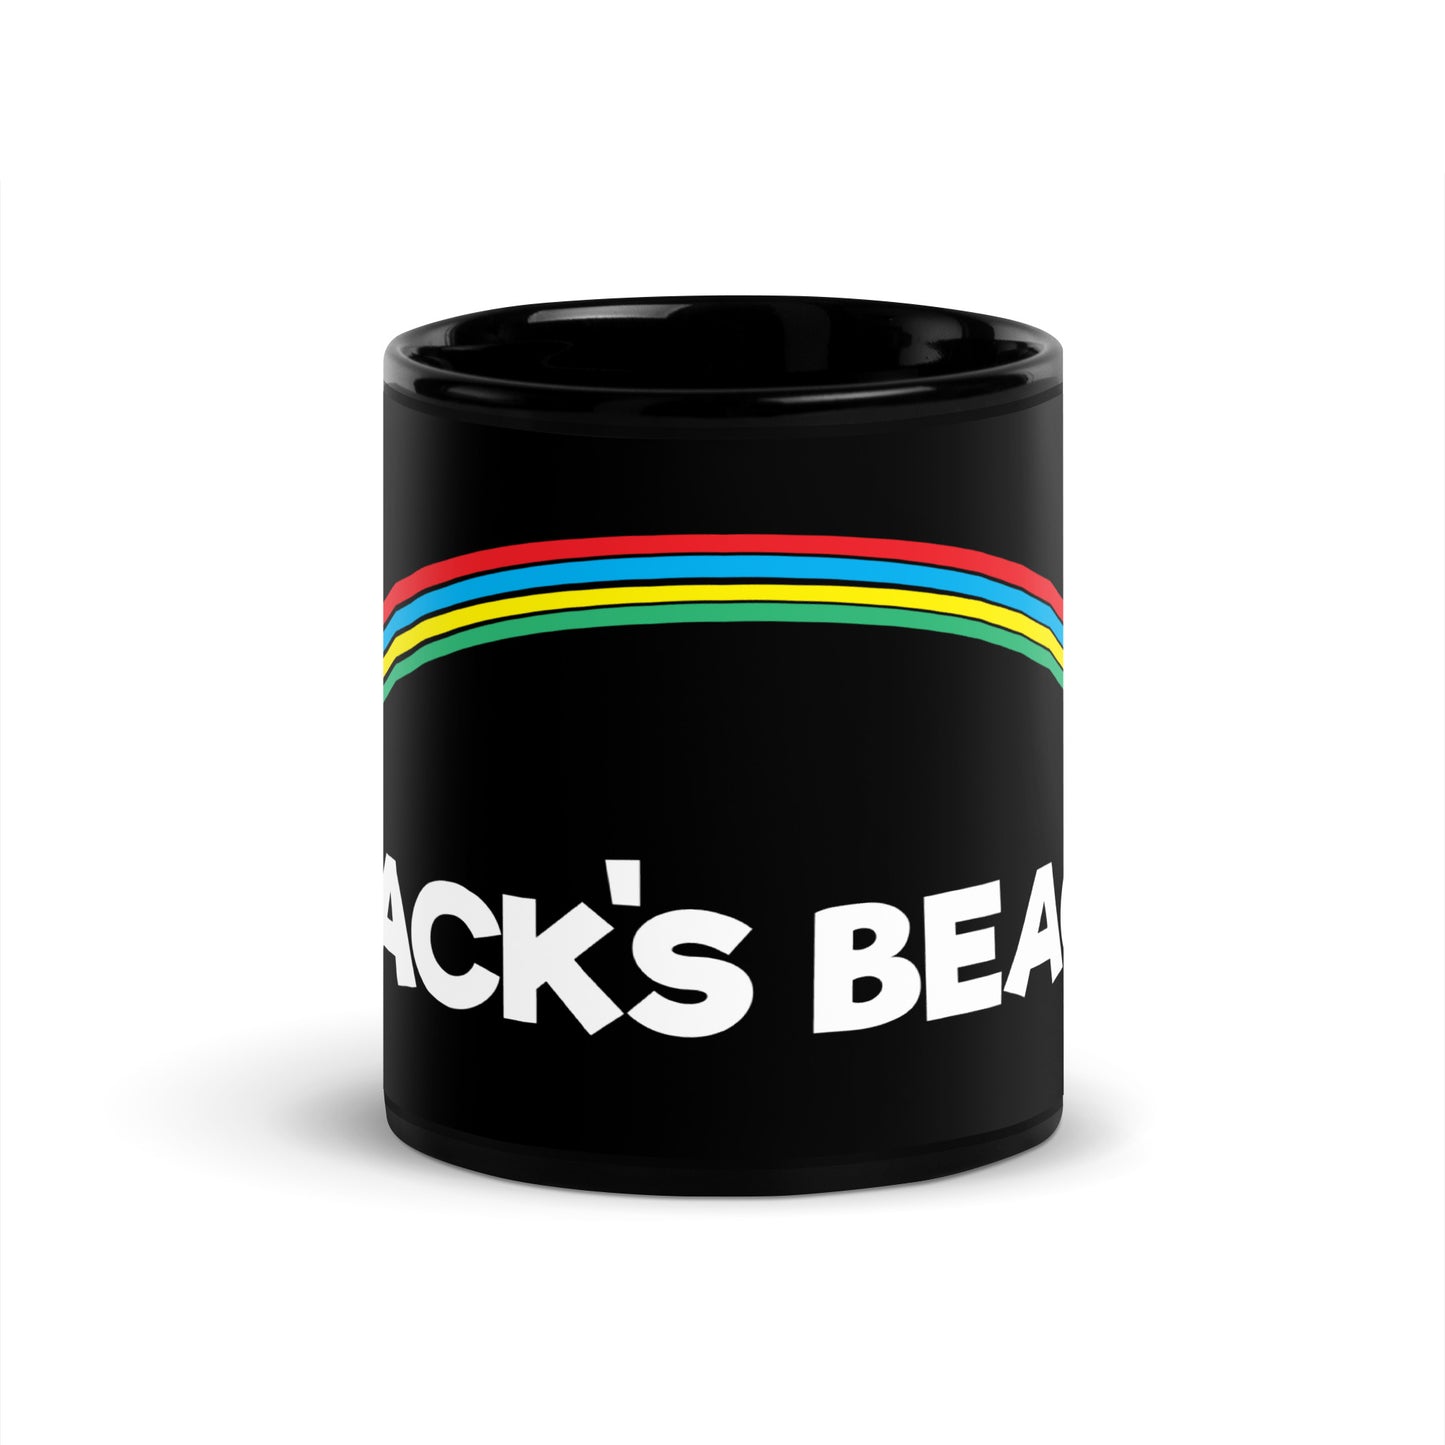 Blacks' Beach Tees / Style 02 / Black Glossy Mug